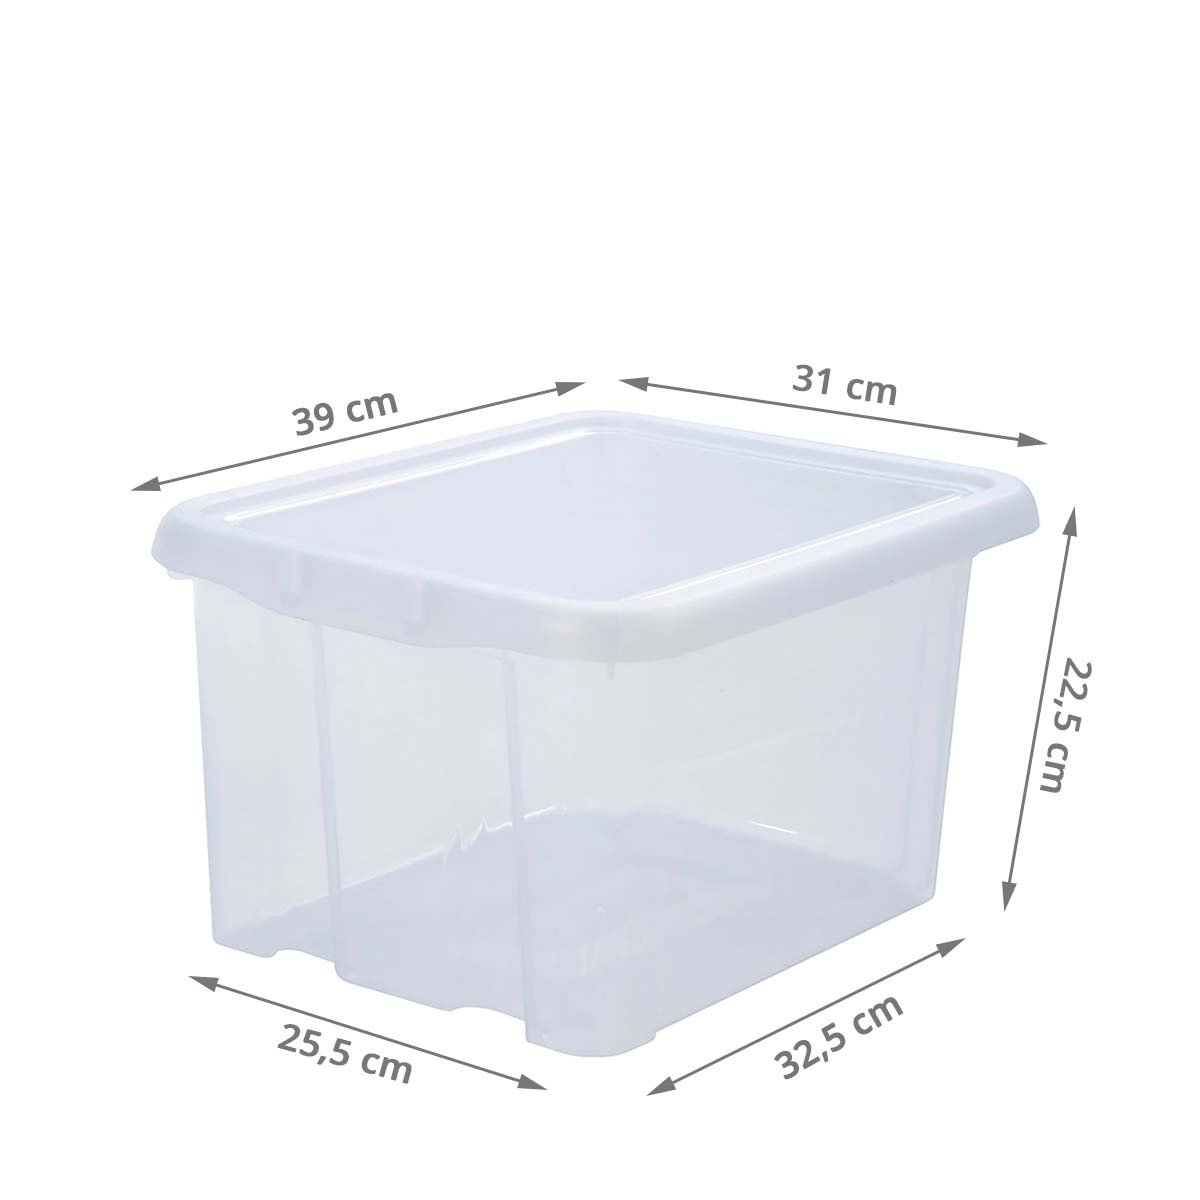 Boite plastique transparente - BASICBOX CLC-XL